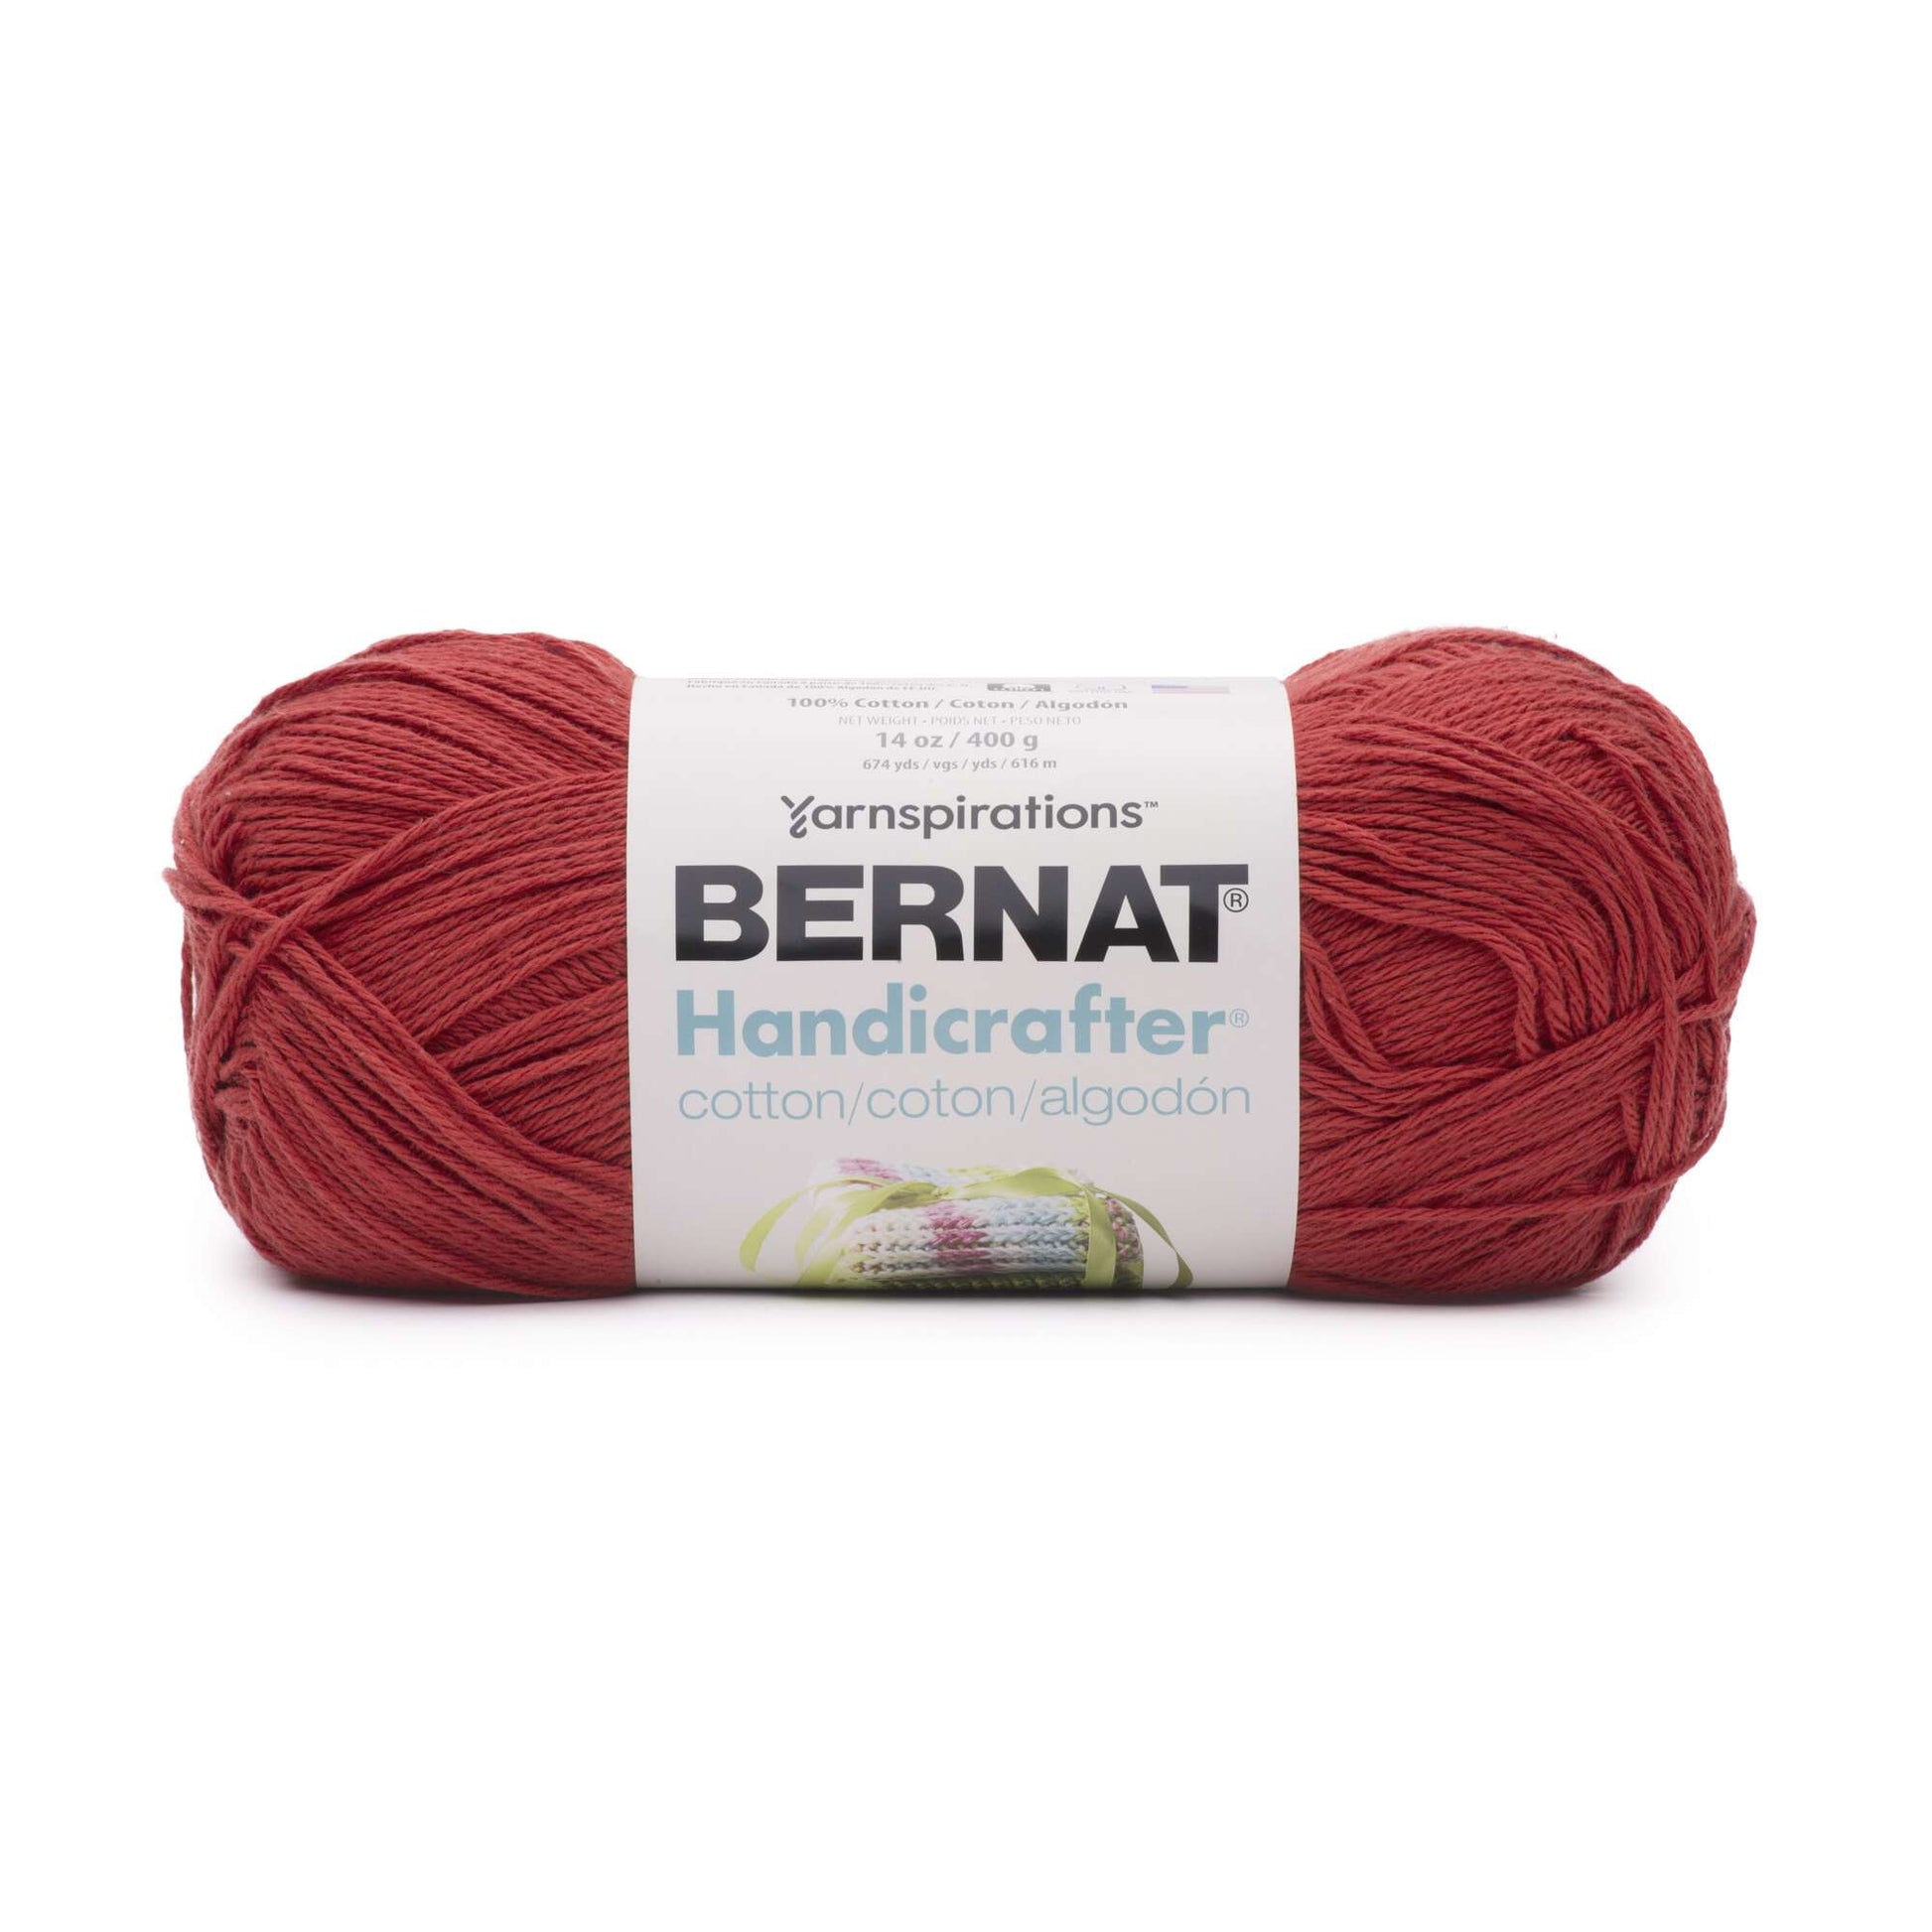 Bernat Handicrafter Cotton Yarn (400g/14oz) - Discontinued Shades Red